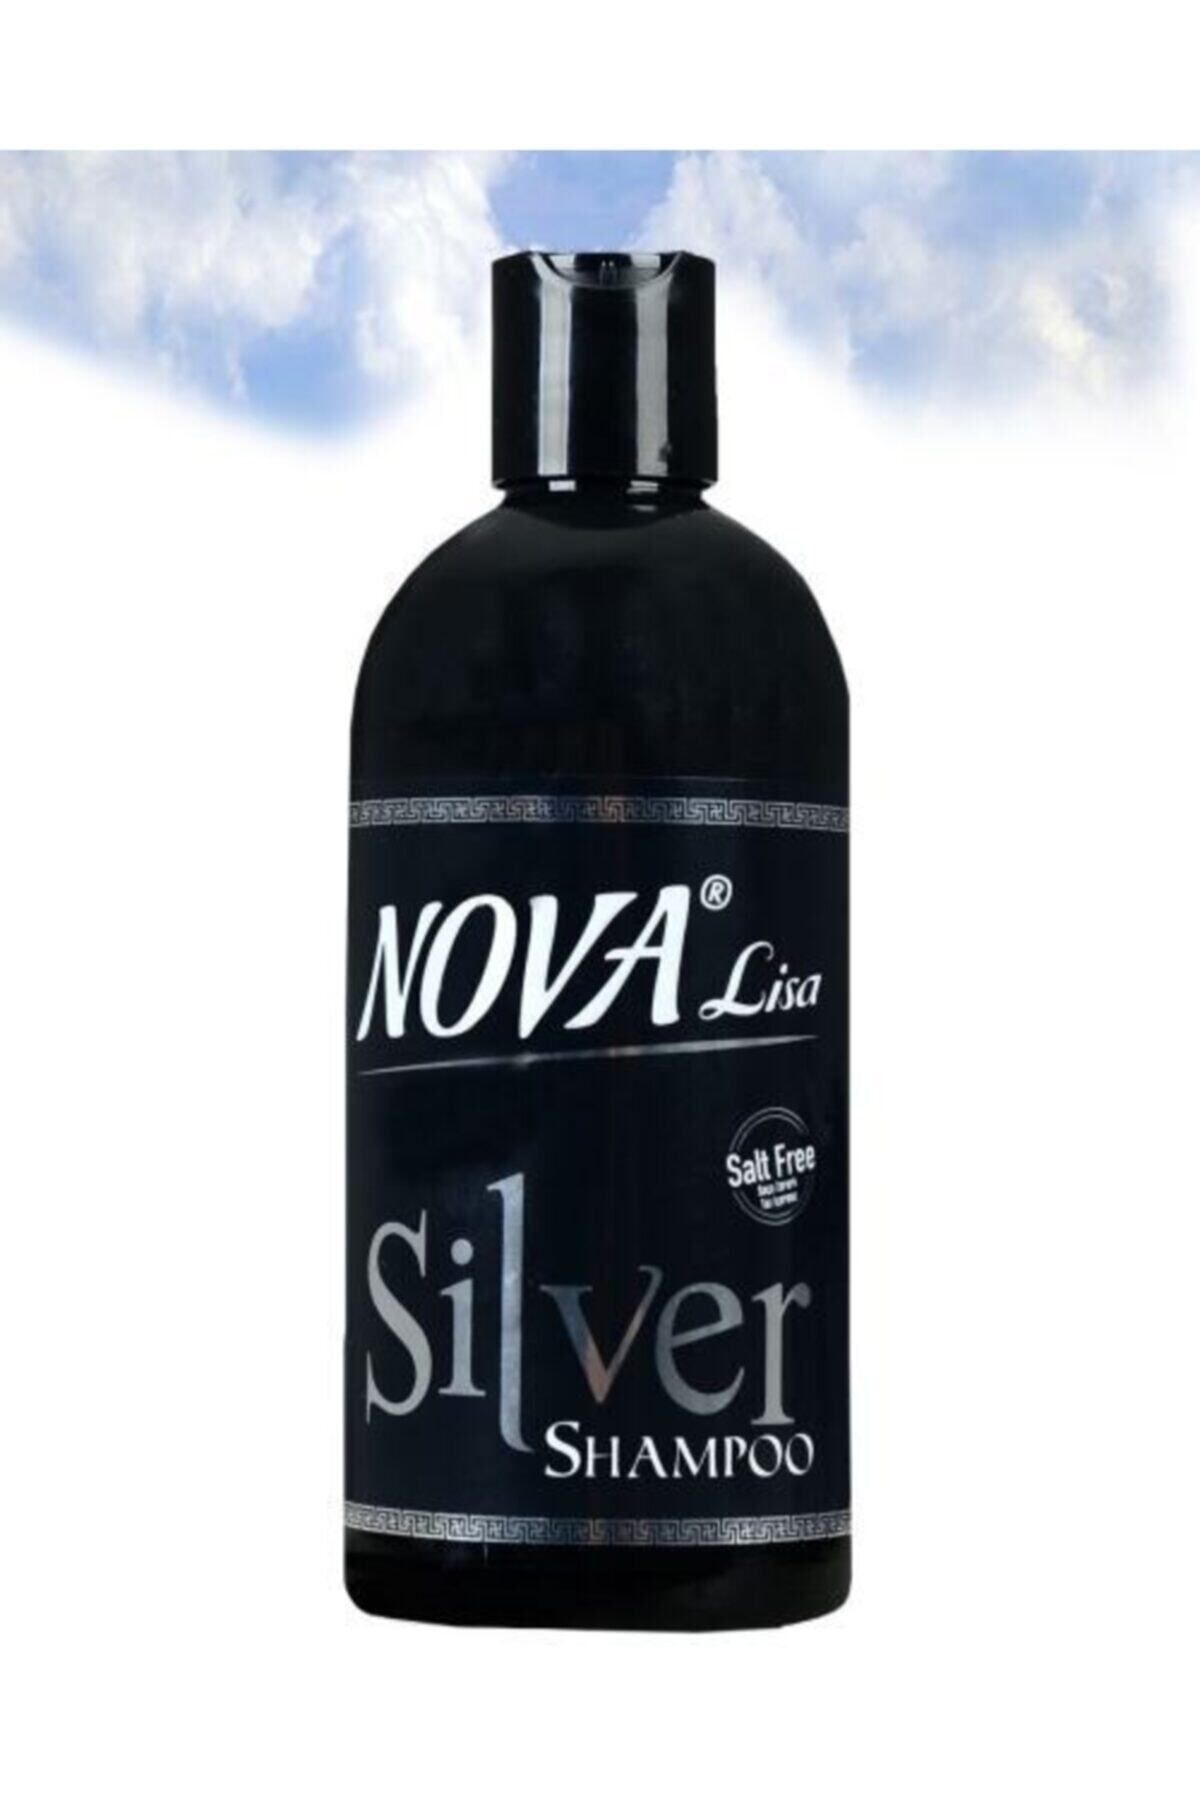 Nova Special for Dyed Hair Lisa Salt-Free Silver Shampoo 500 ml MehDem31